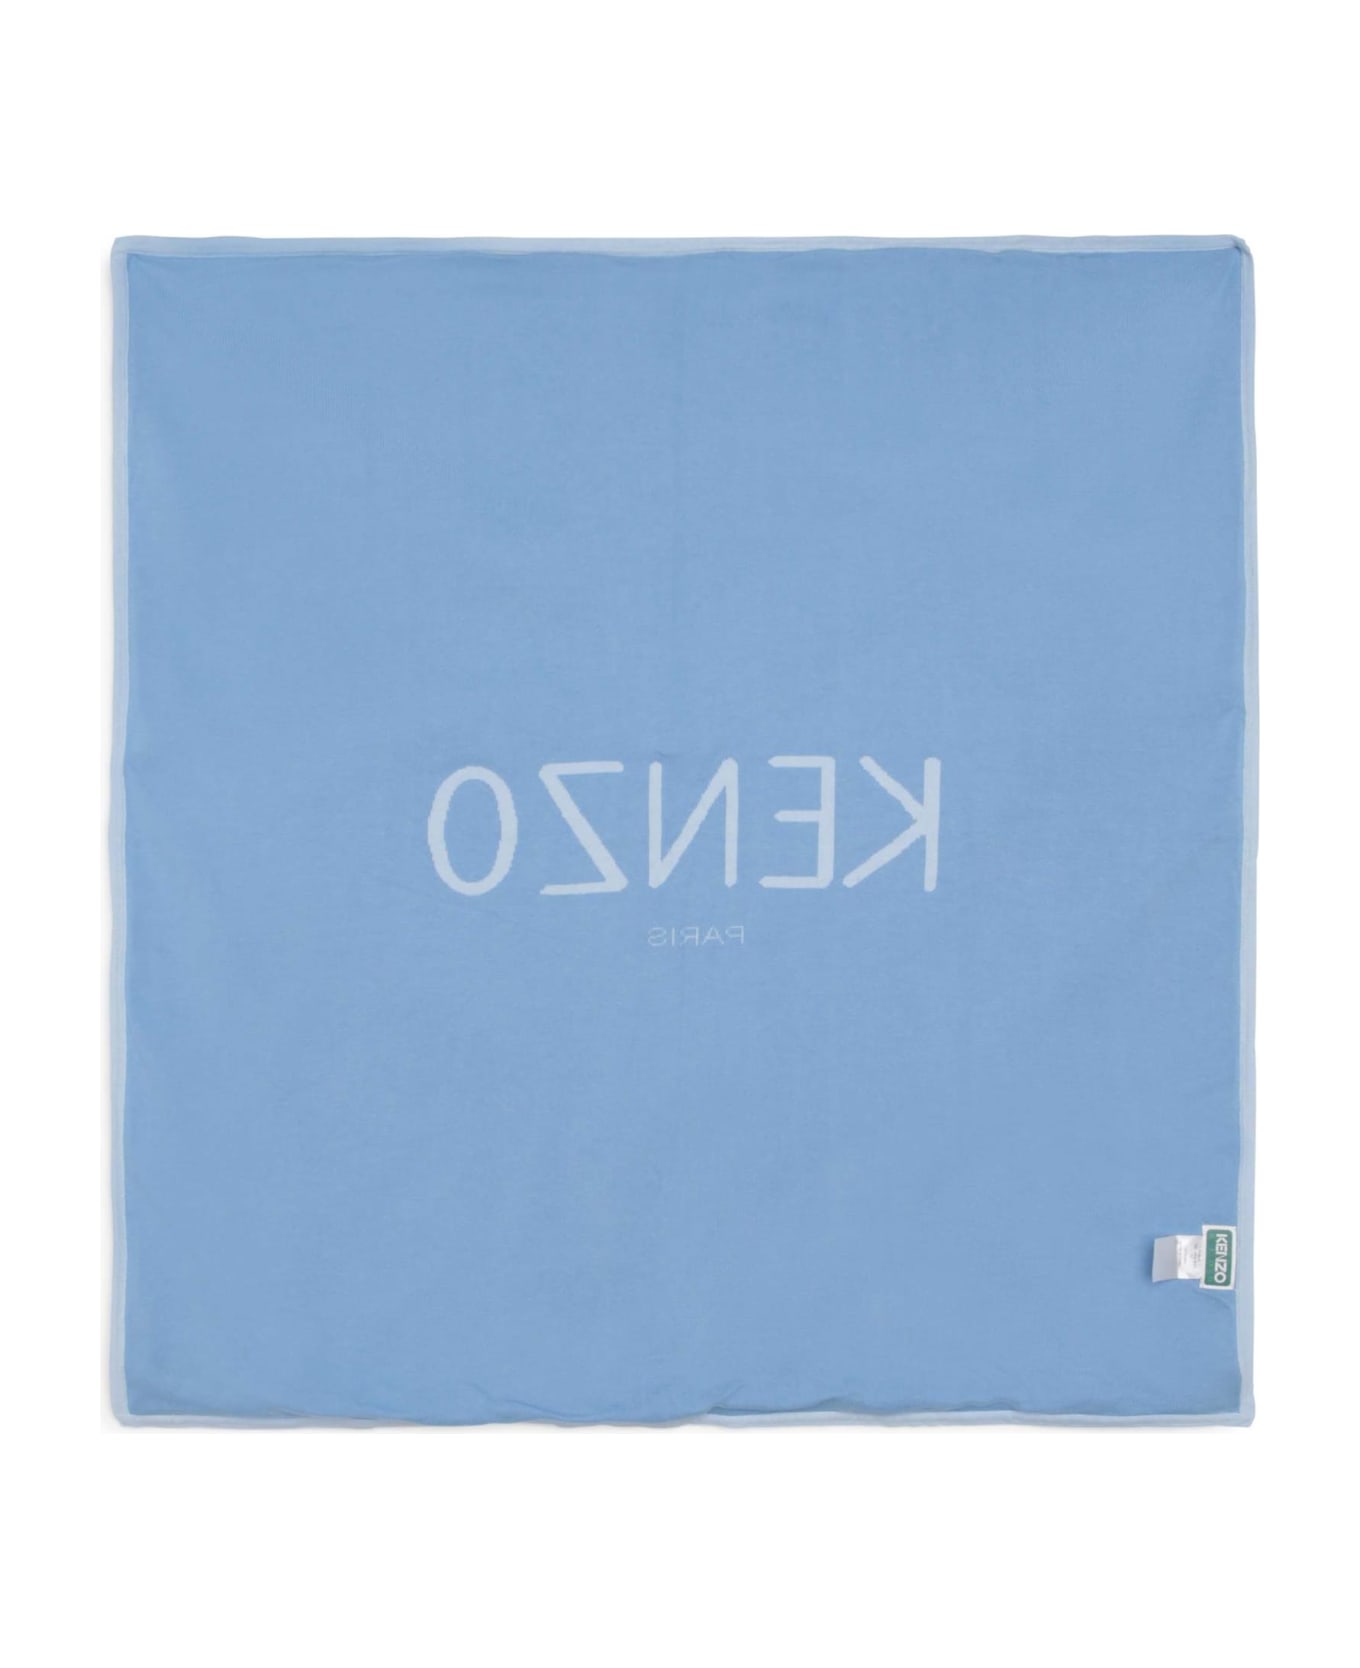 Kenzo Kids Blanket With Logo - Blue